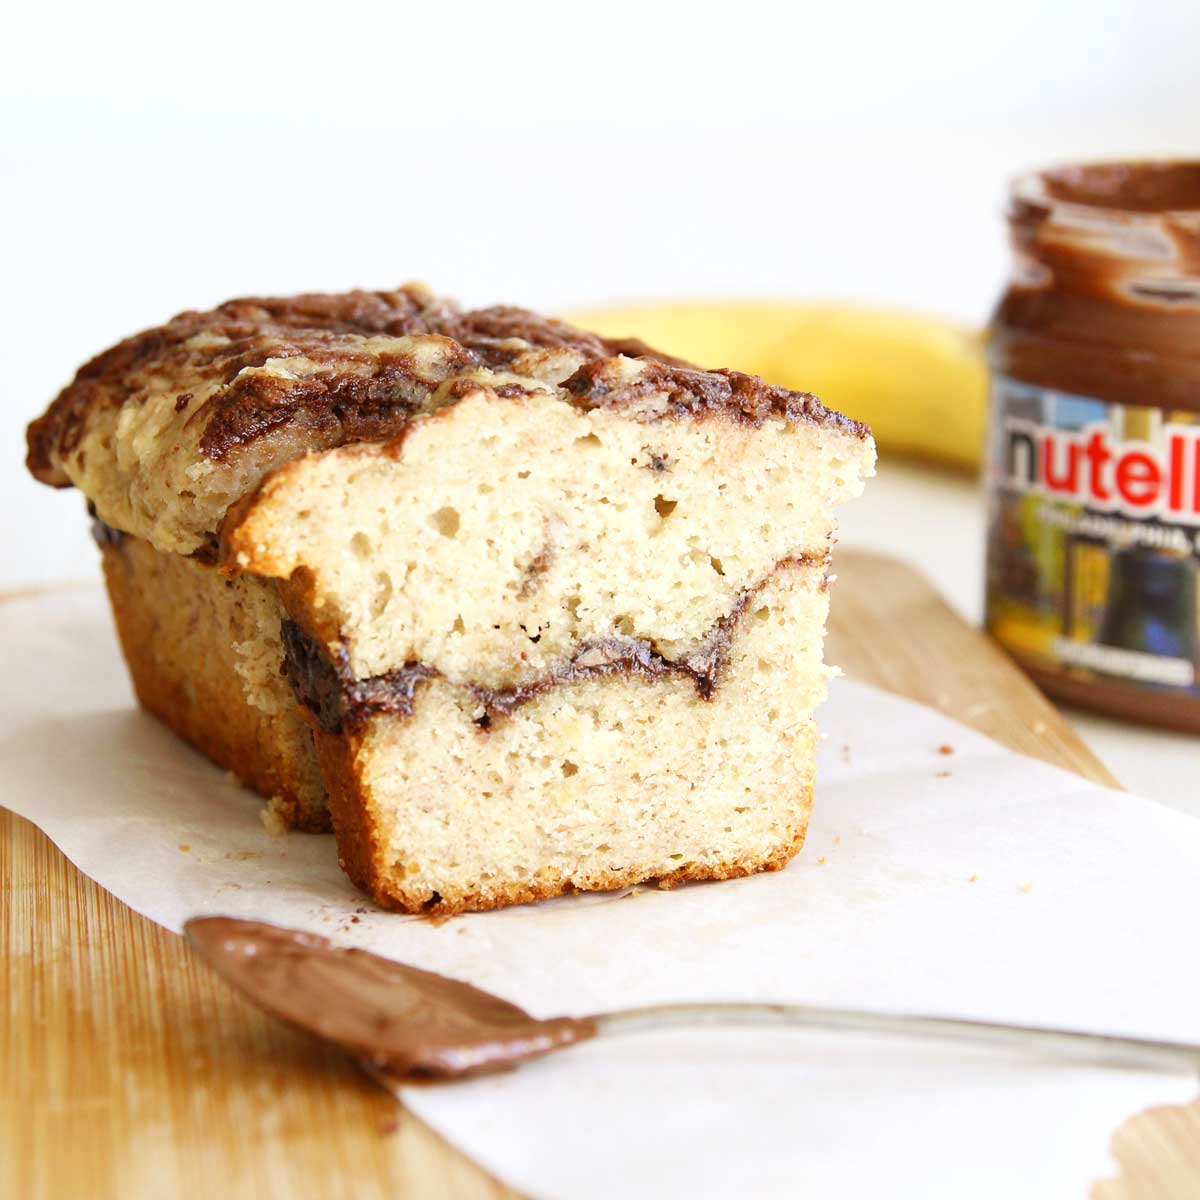 Super Moist Nutella Stuffed Banana Bread with Olive Oil & Almond Flour - Lemon Whipped Cream